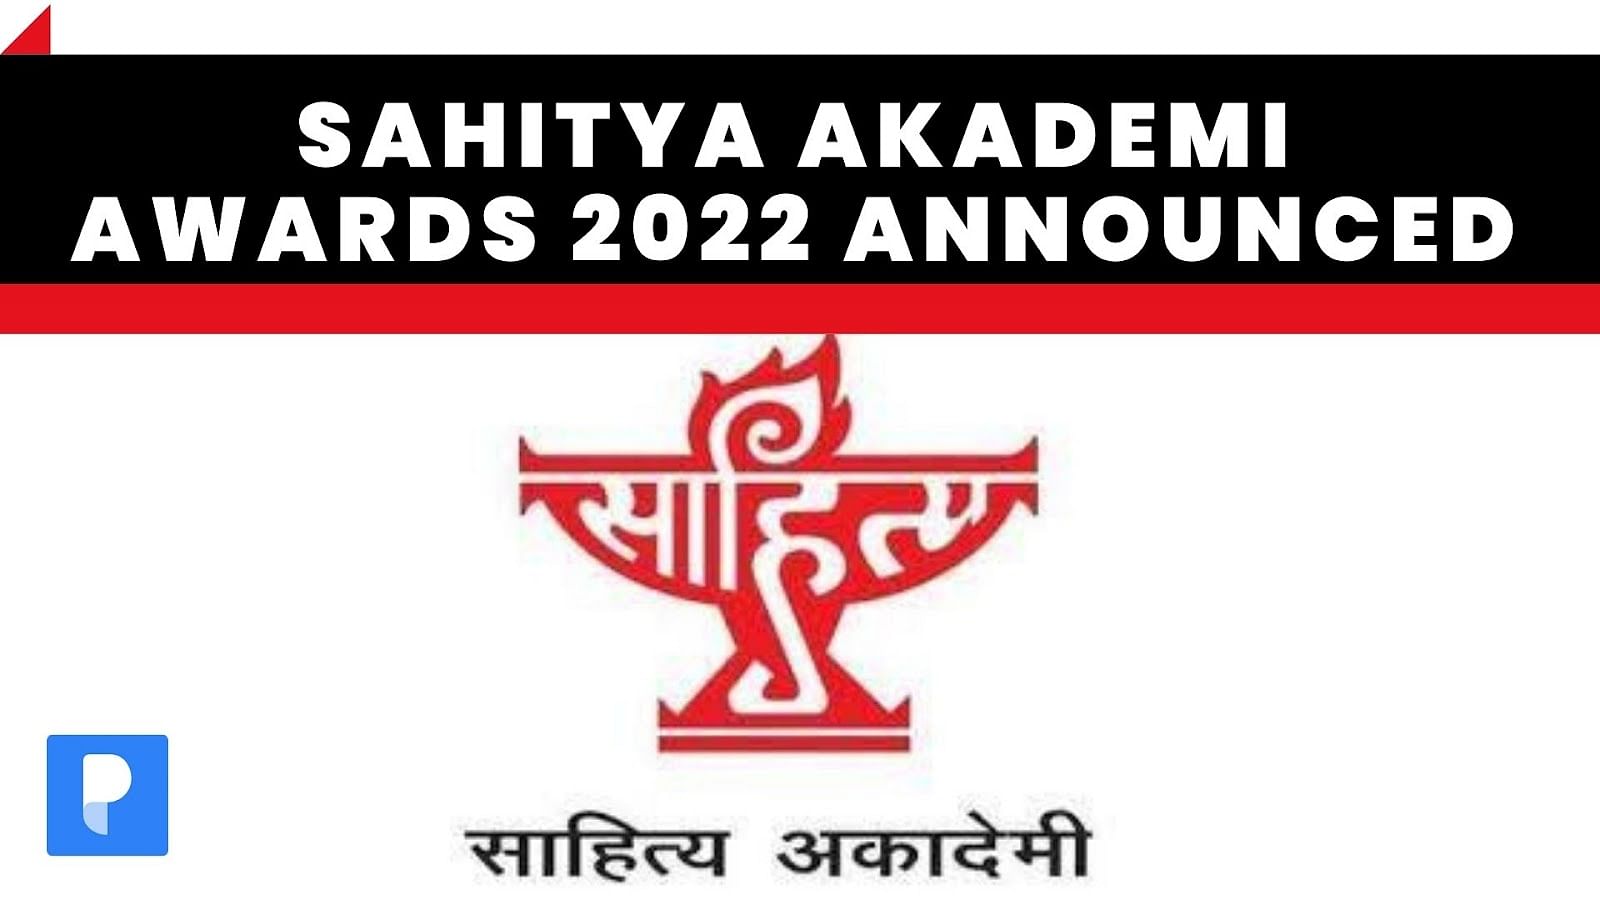 Sahitya Akademi Awards 2022 Announced on December 22